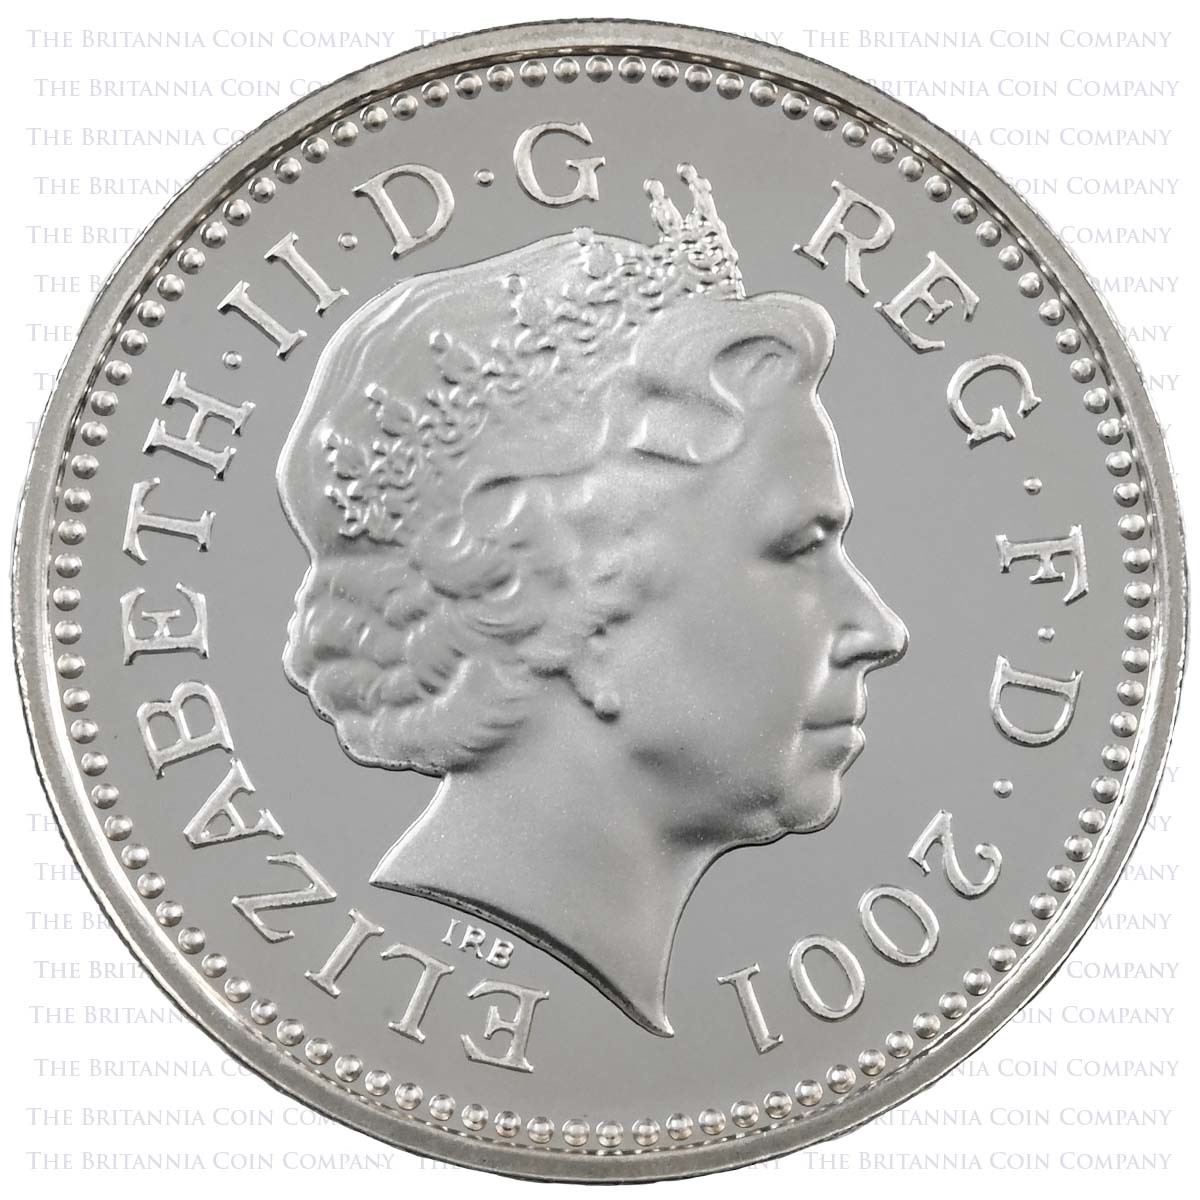 UK01SPBC 2001 Northern Ireland Celtic Cross £1 Silver Proof Obverse